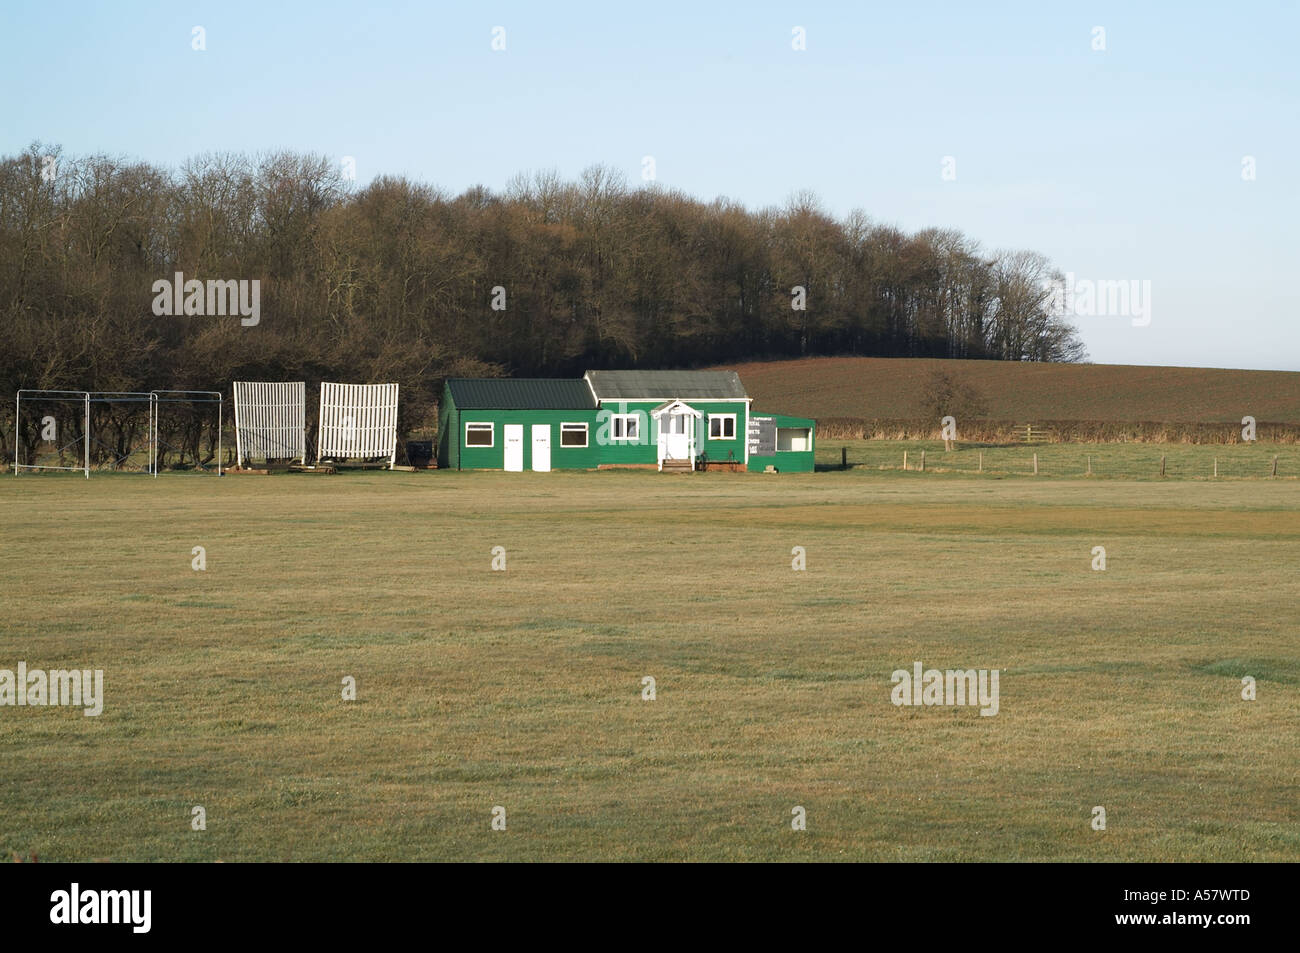 village Cricket Pavilion out of season Stock Photo